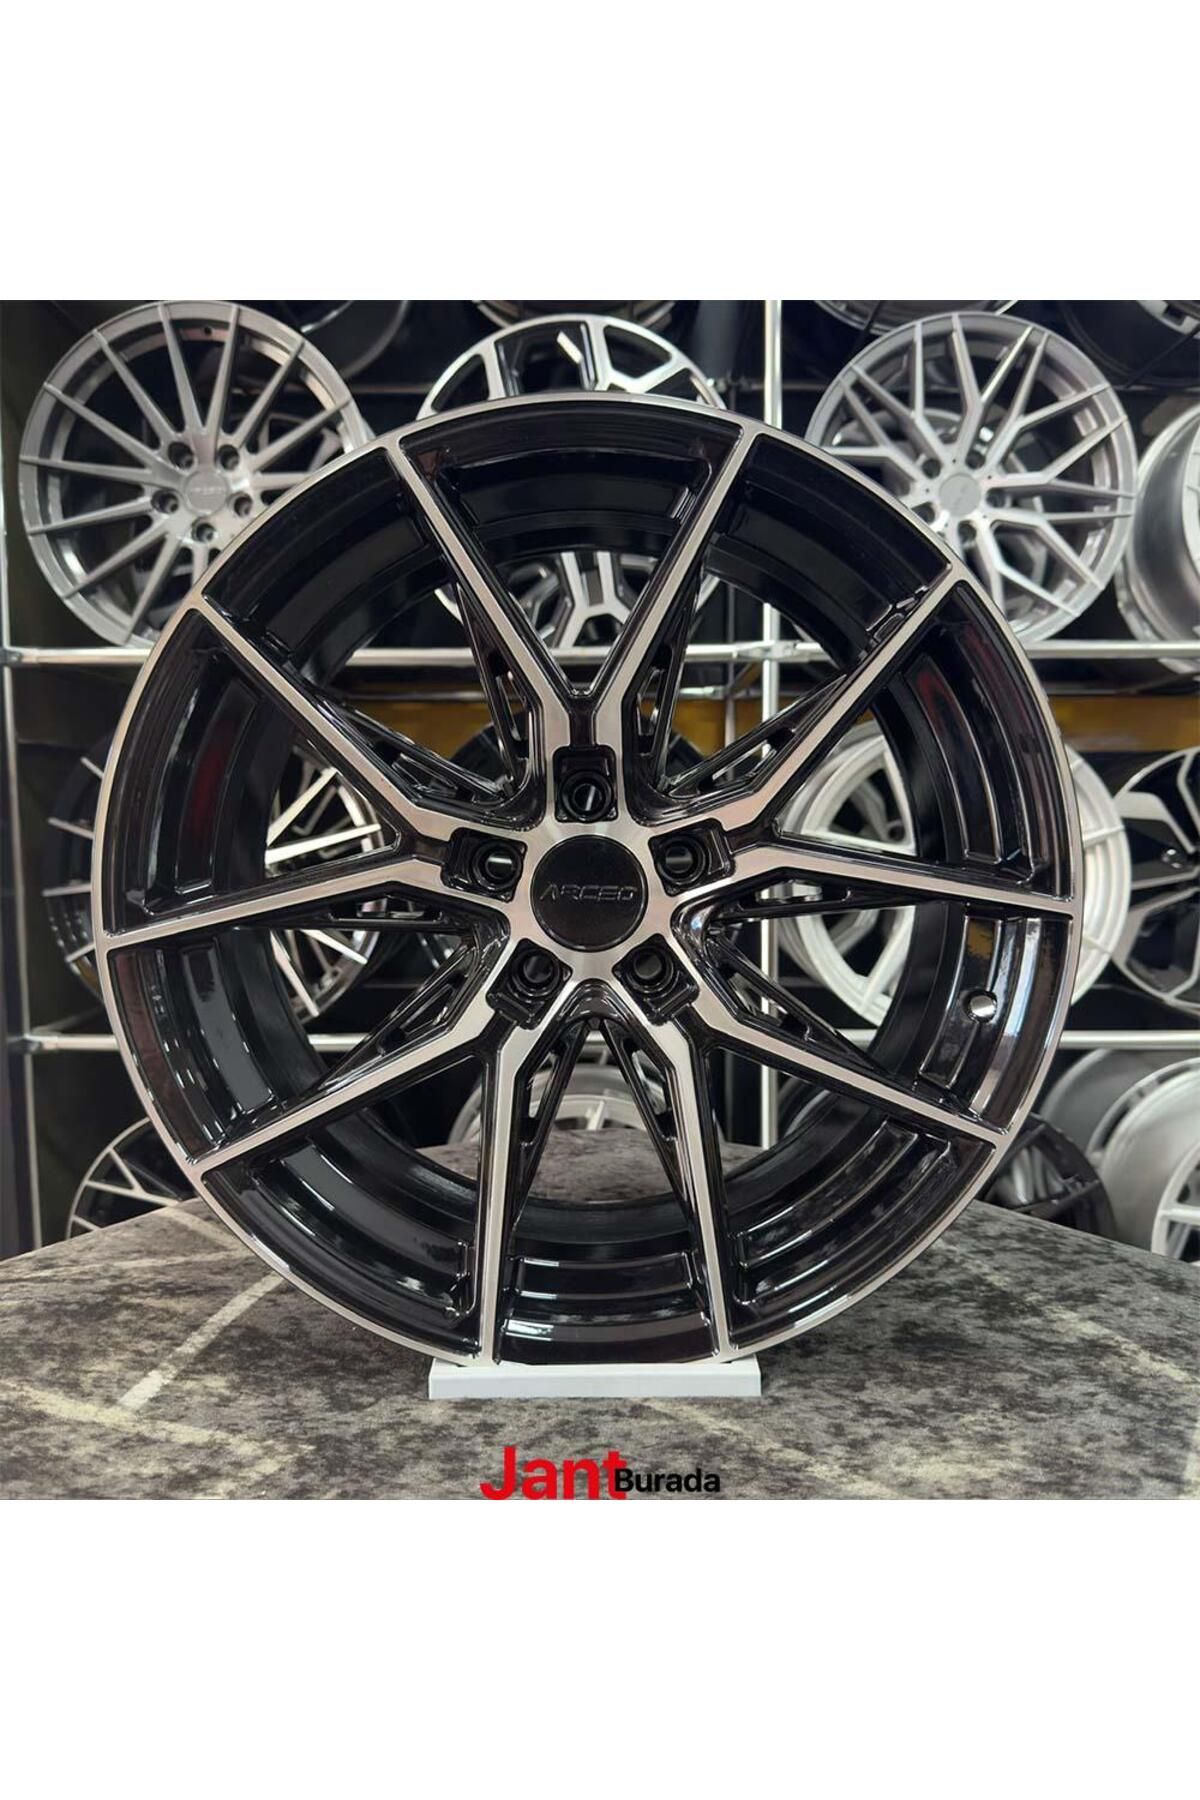 Arceo 17" (inç) 5x114.3 ARCEO MARSEİLLE CİVİC İ30 COROLLA UYUMLU Siyah Elmas Kesim Jant Modeli Honda Toyot